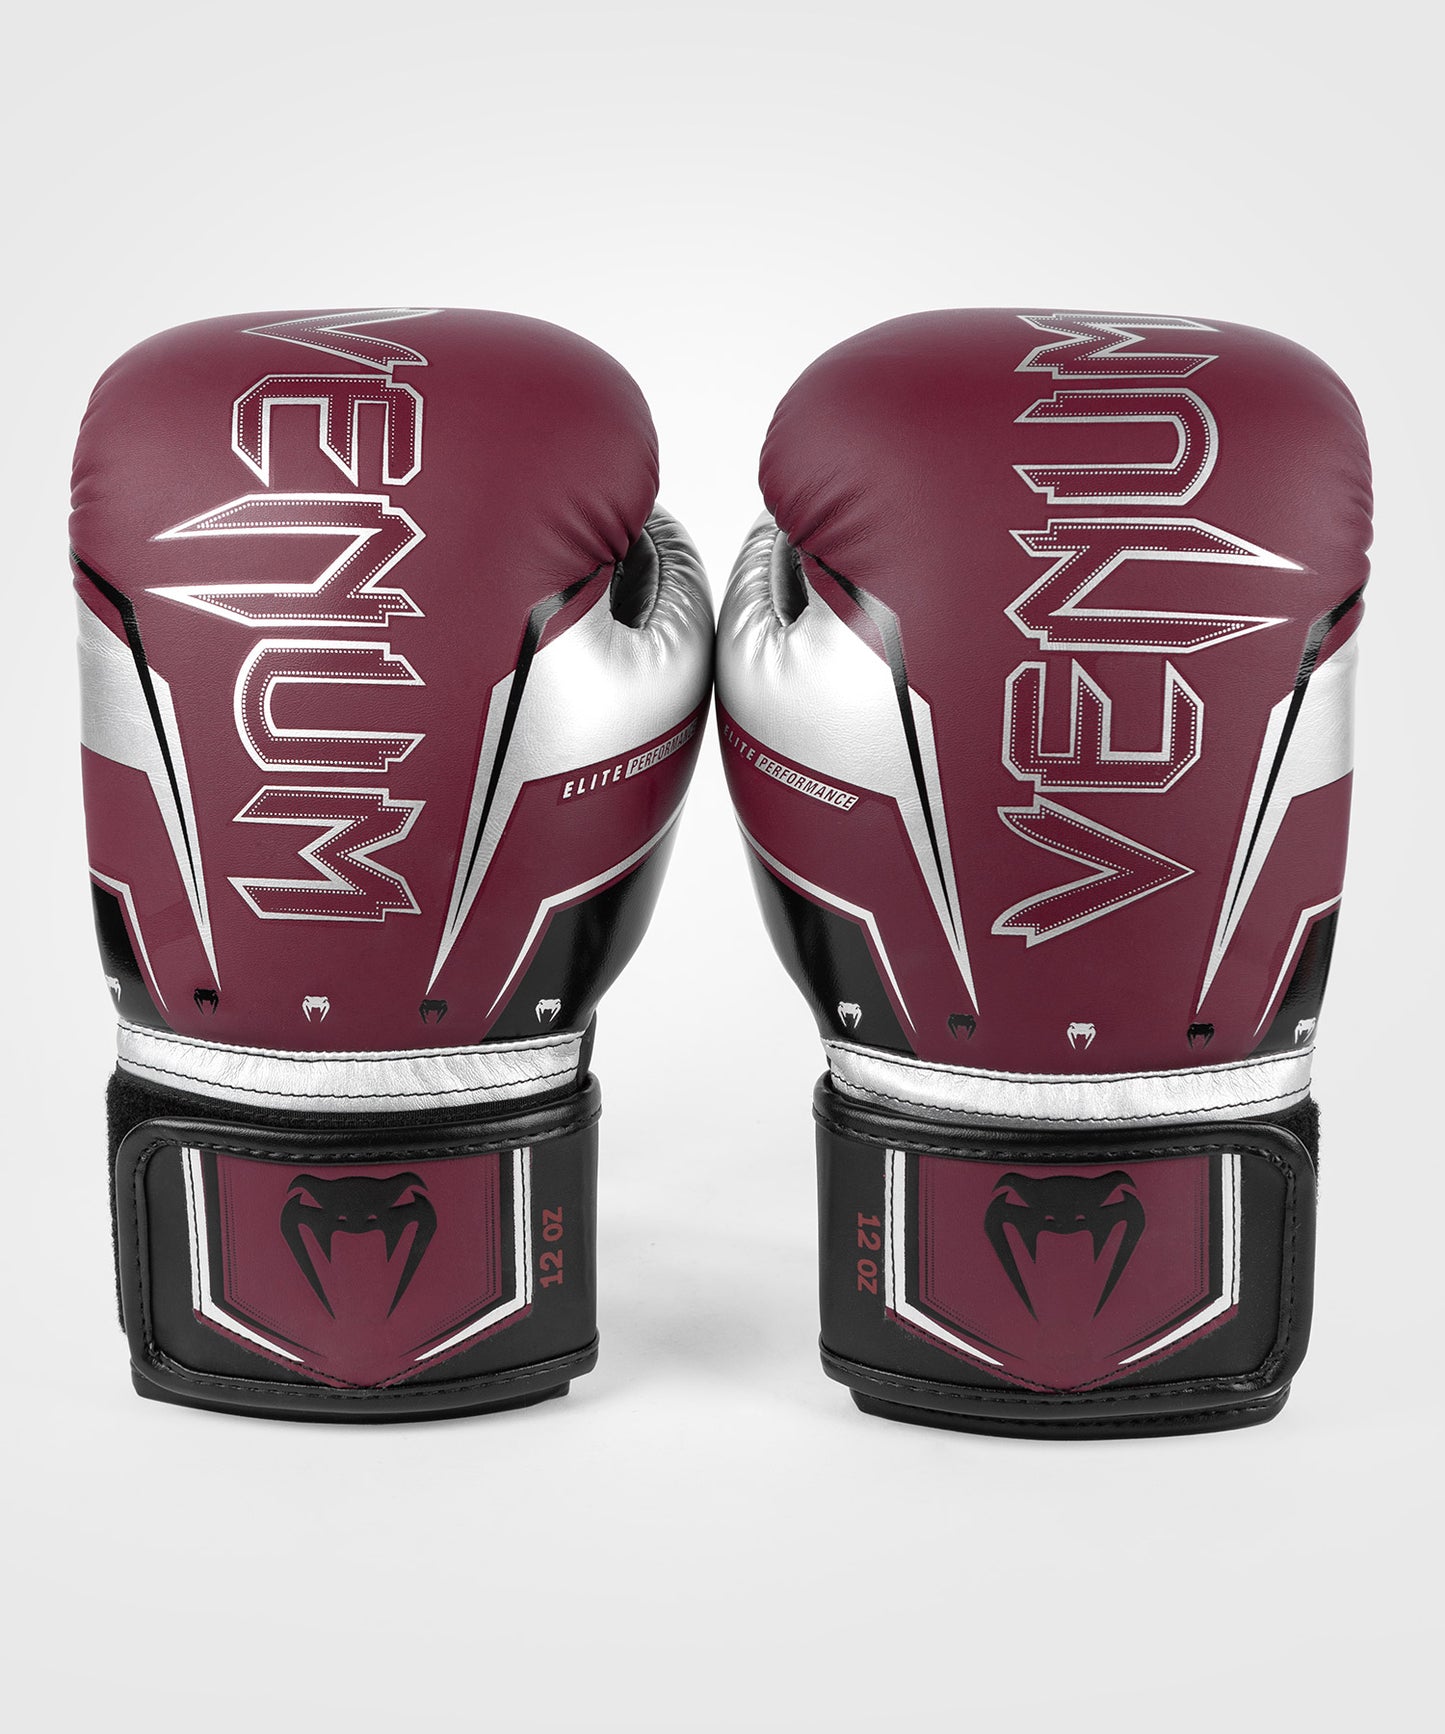 Venum Elite Evo Boxing Gloves - Burgundy/Silver